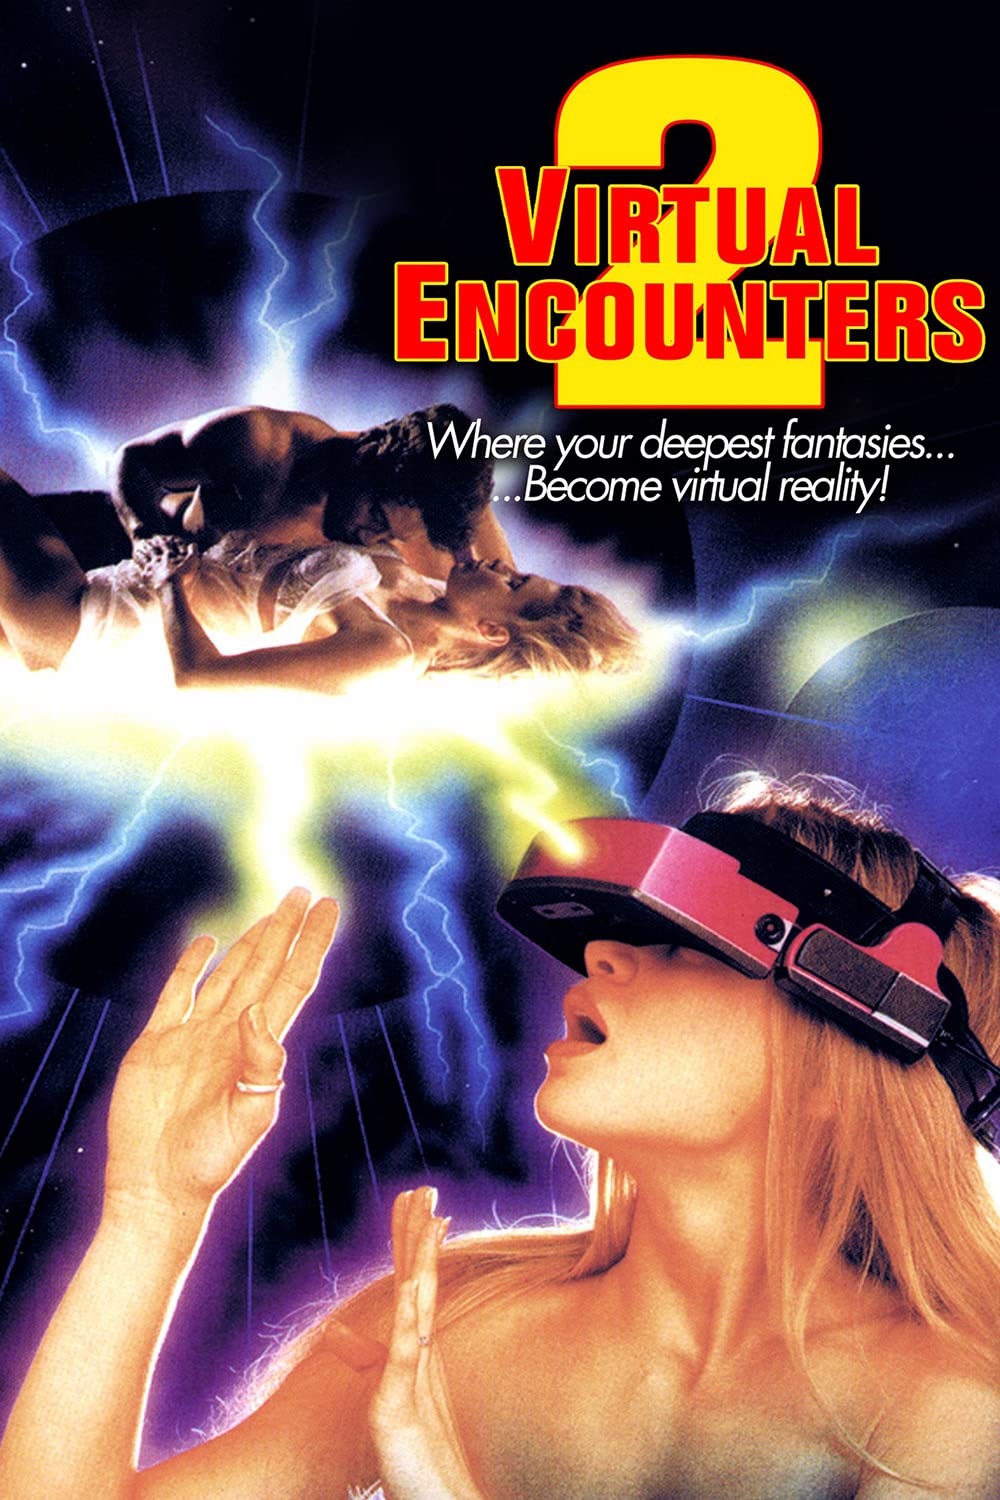 Virtual Encounters 2 (1998) - Original Poster - vintagepornfun.com